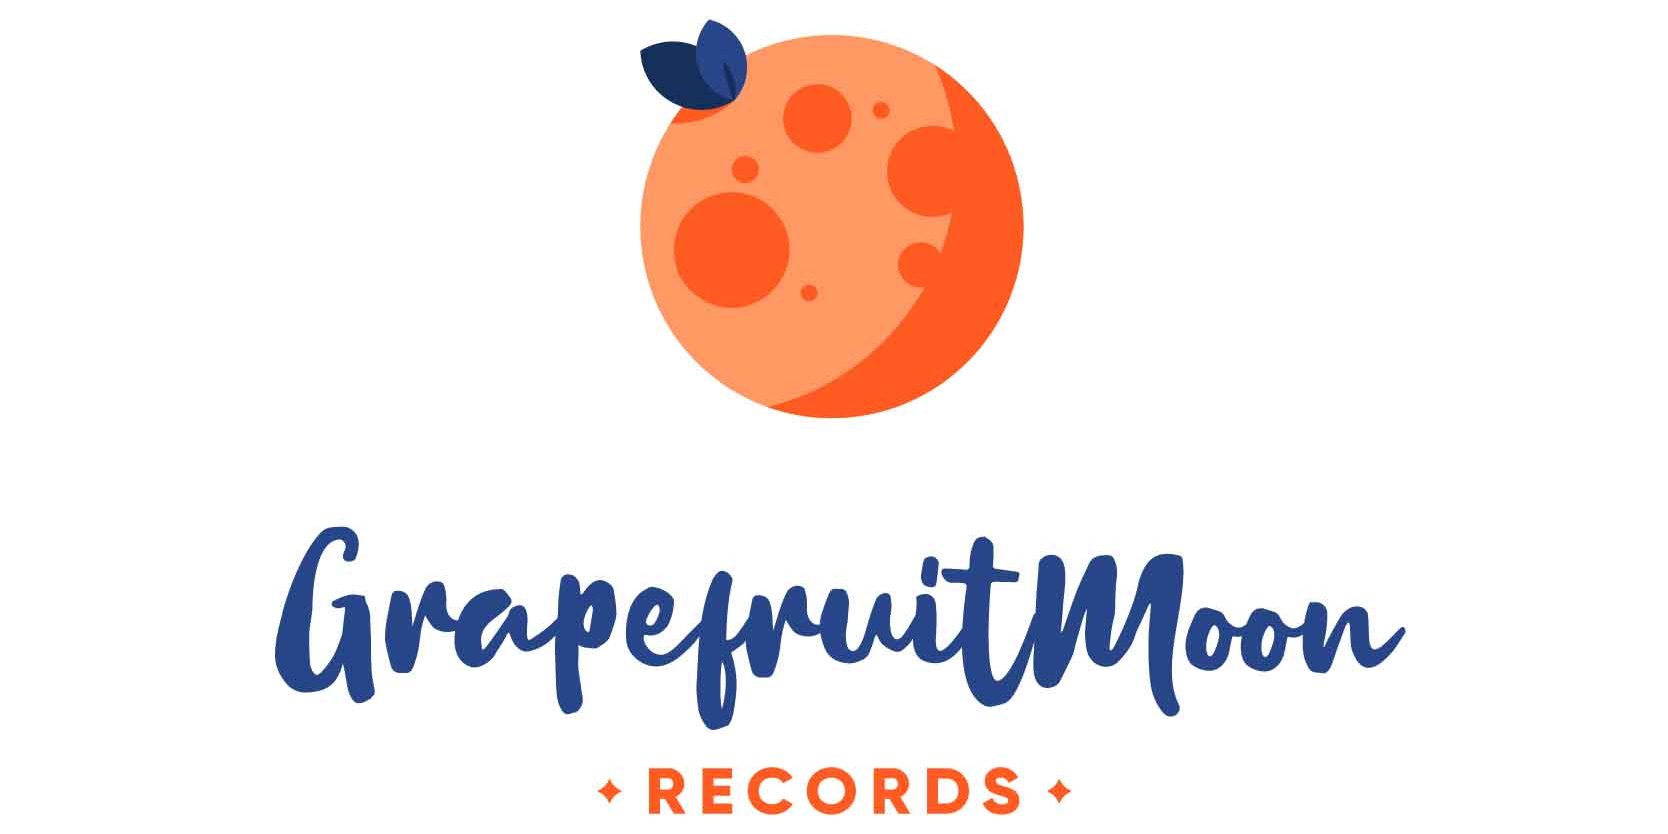 GrapefruitMoon